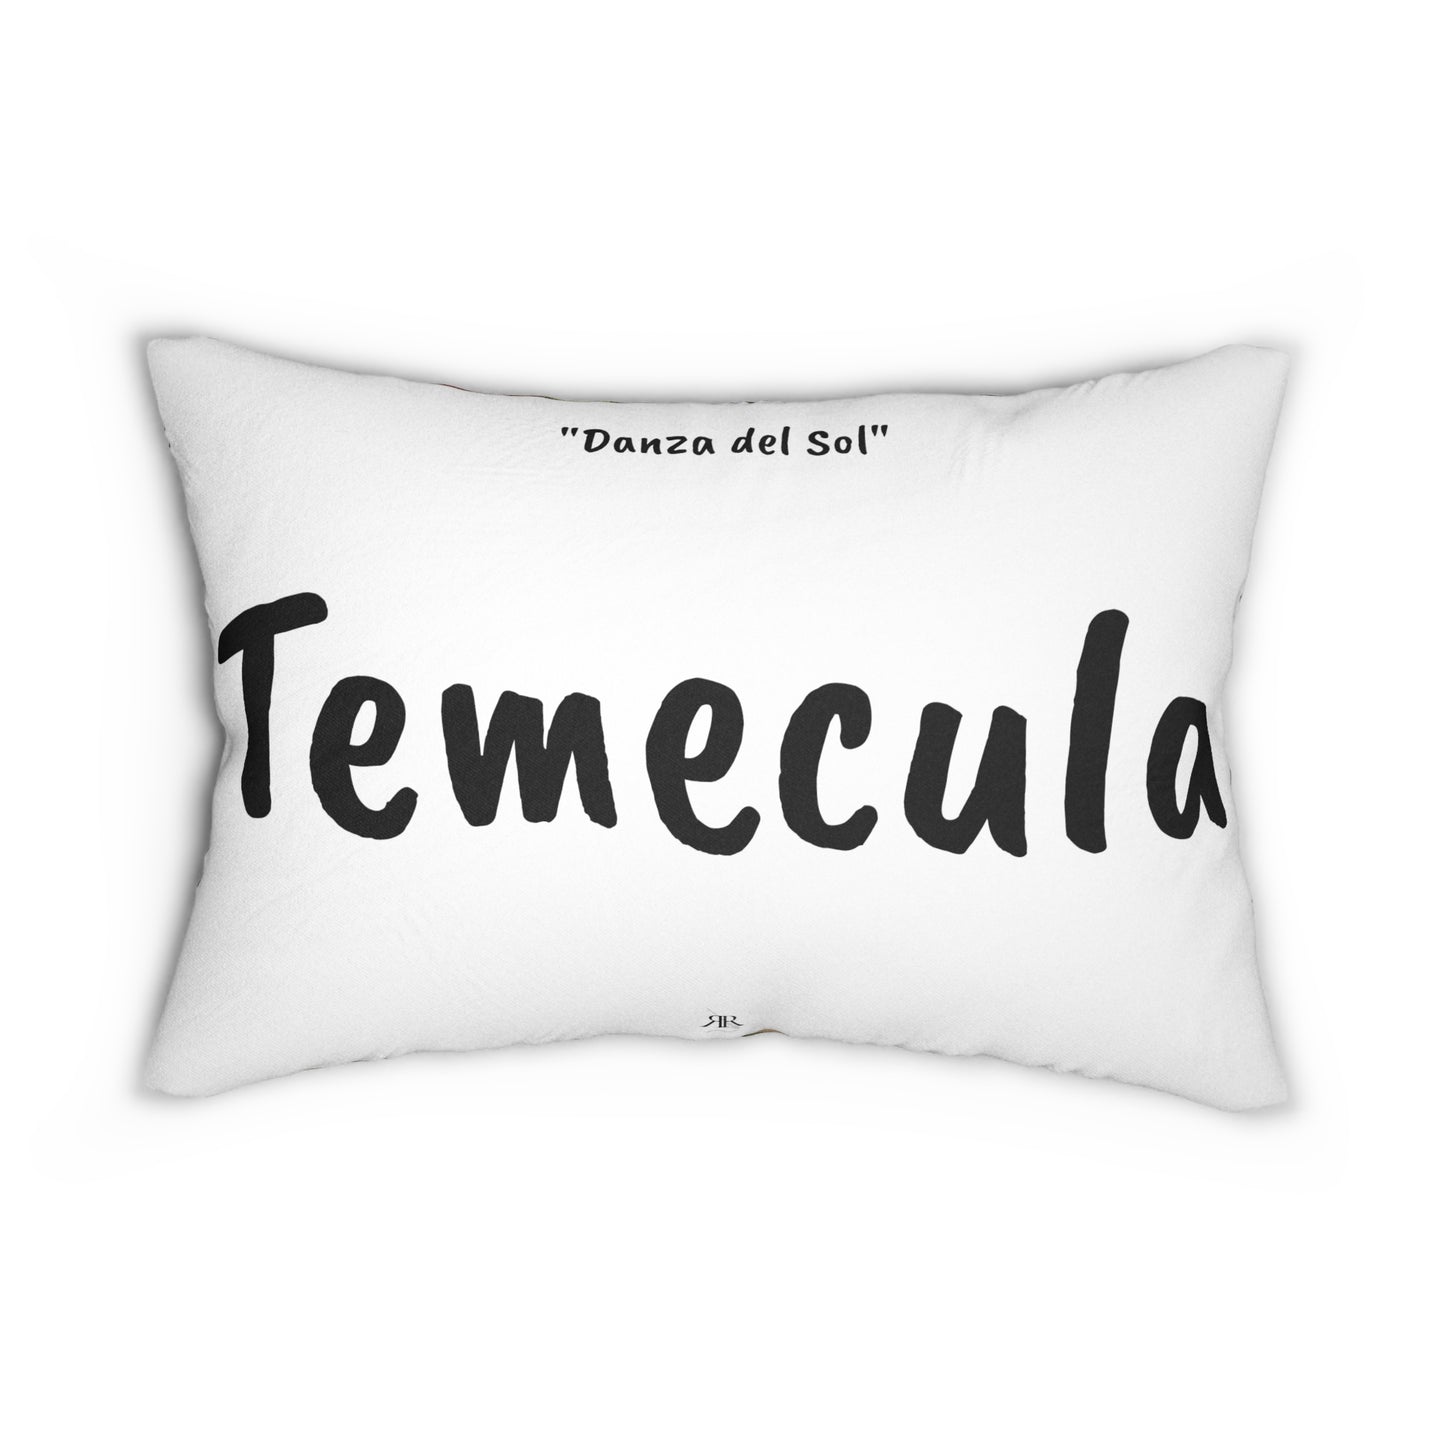 Oreiller lombaire Temecula avec peinture « Danza del Sol » et « Temecula »